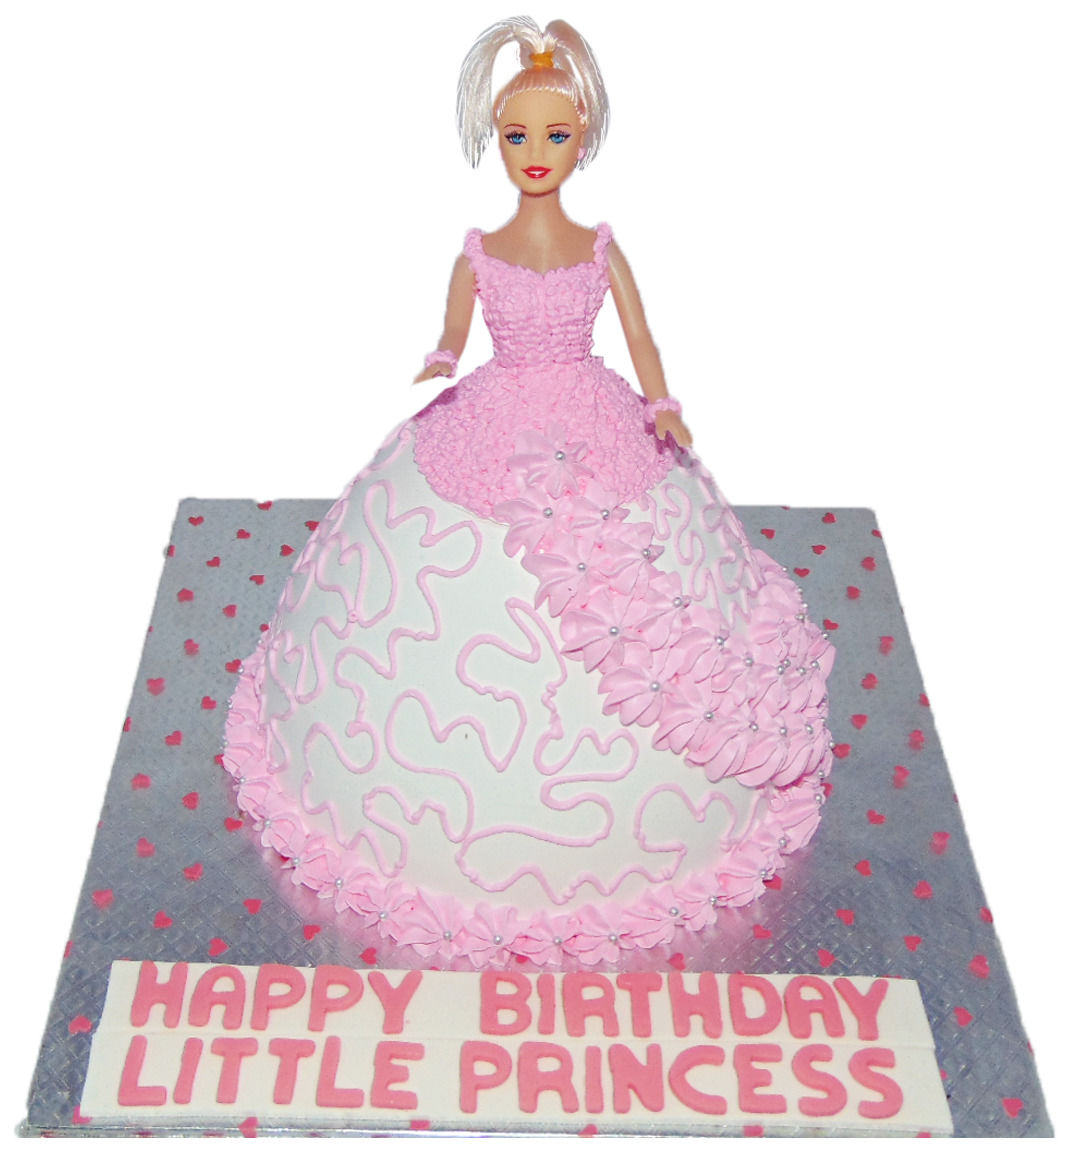 Barbie Girl Cake - order online cake in coimbatore - Friend In knead